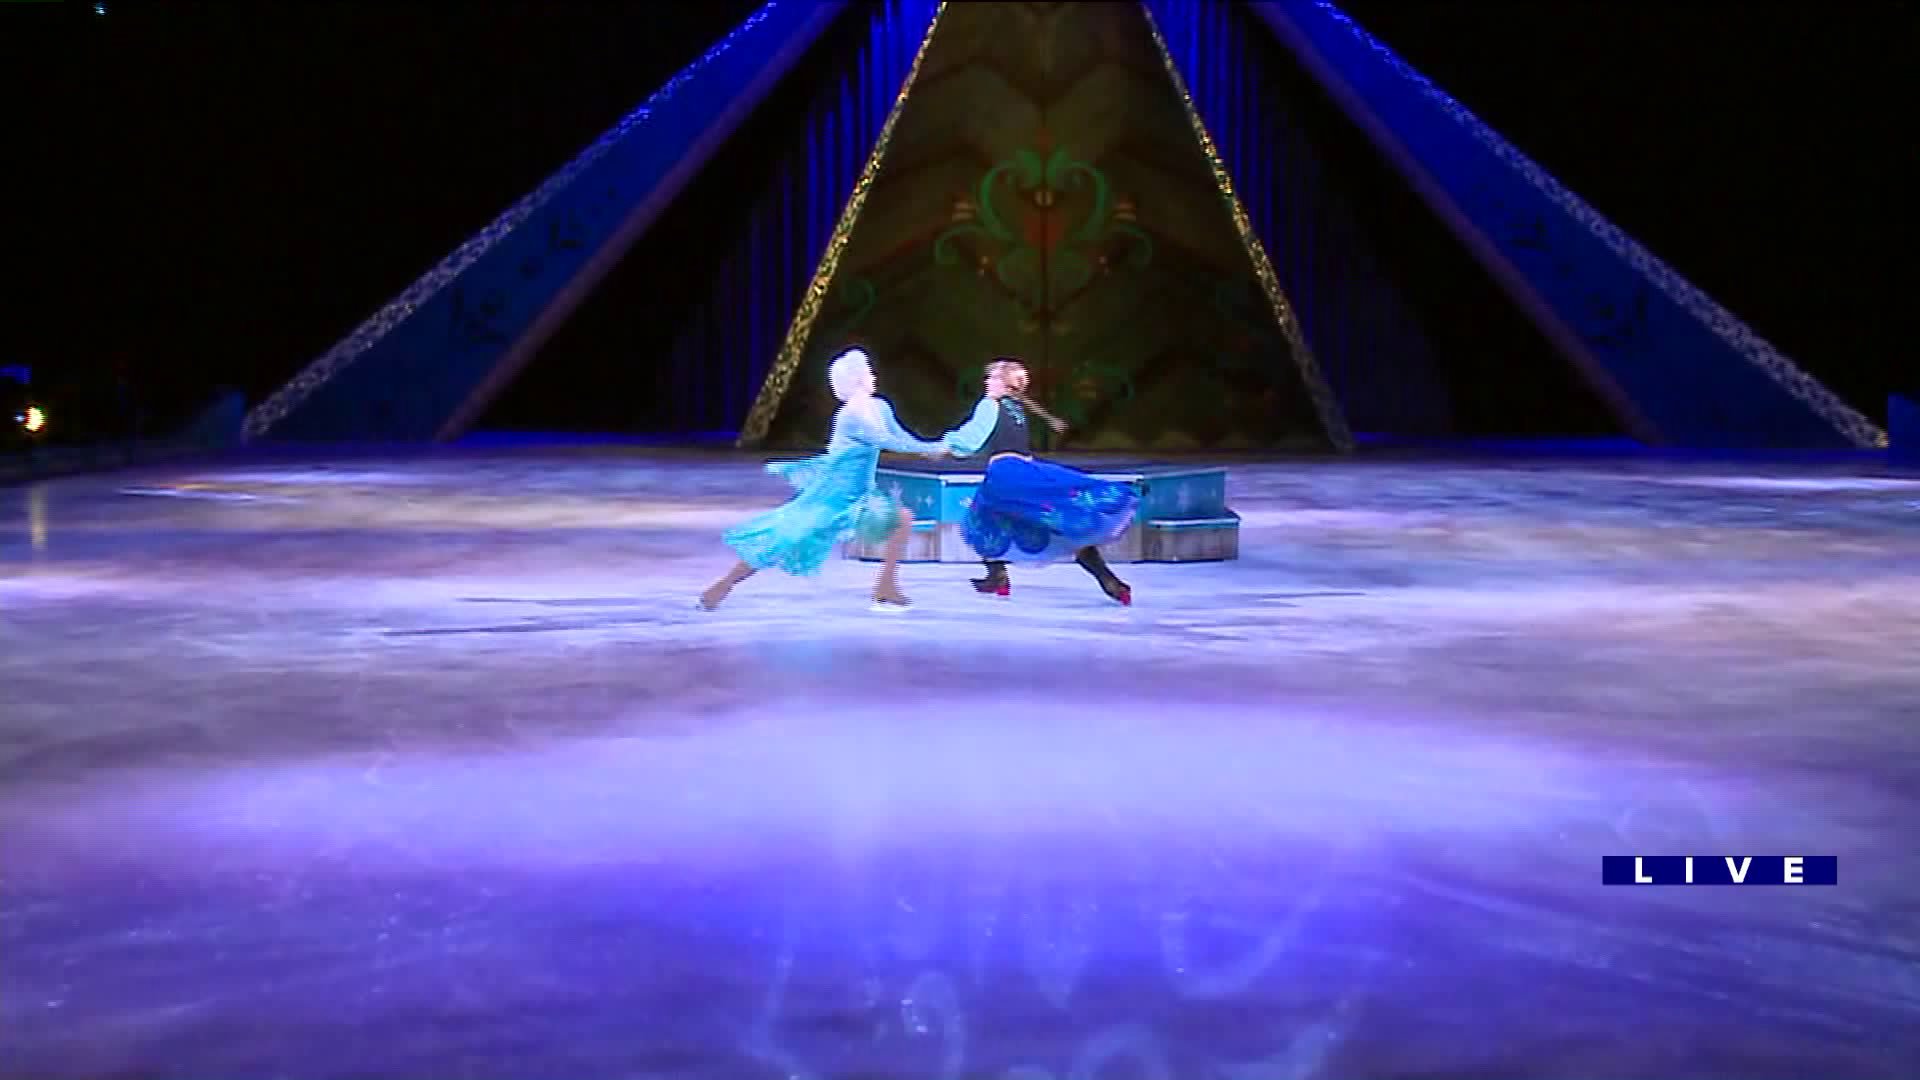 Around Town checks out ‘Disney On Ice presents Frozen’